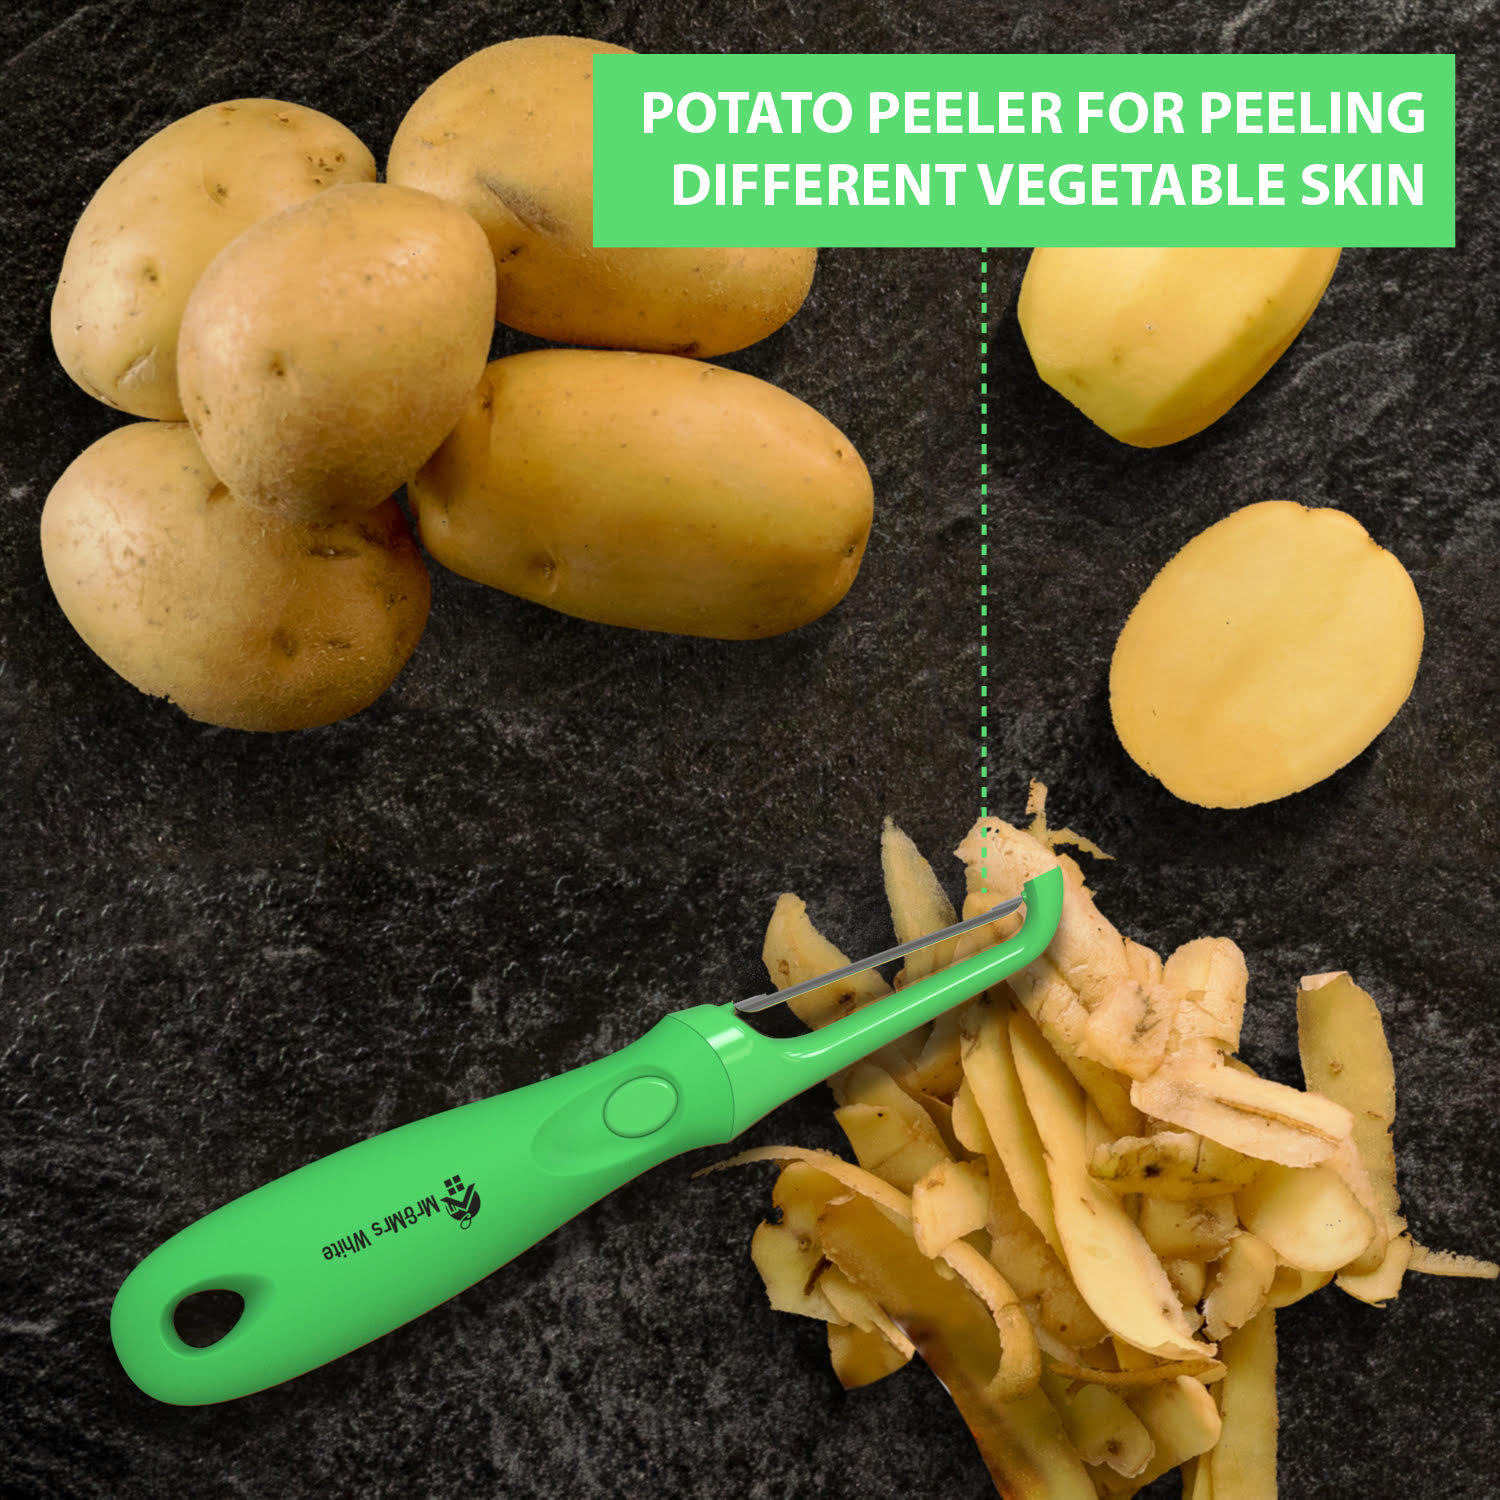 Swedish Stainless Potato Peeler